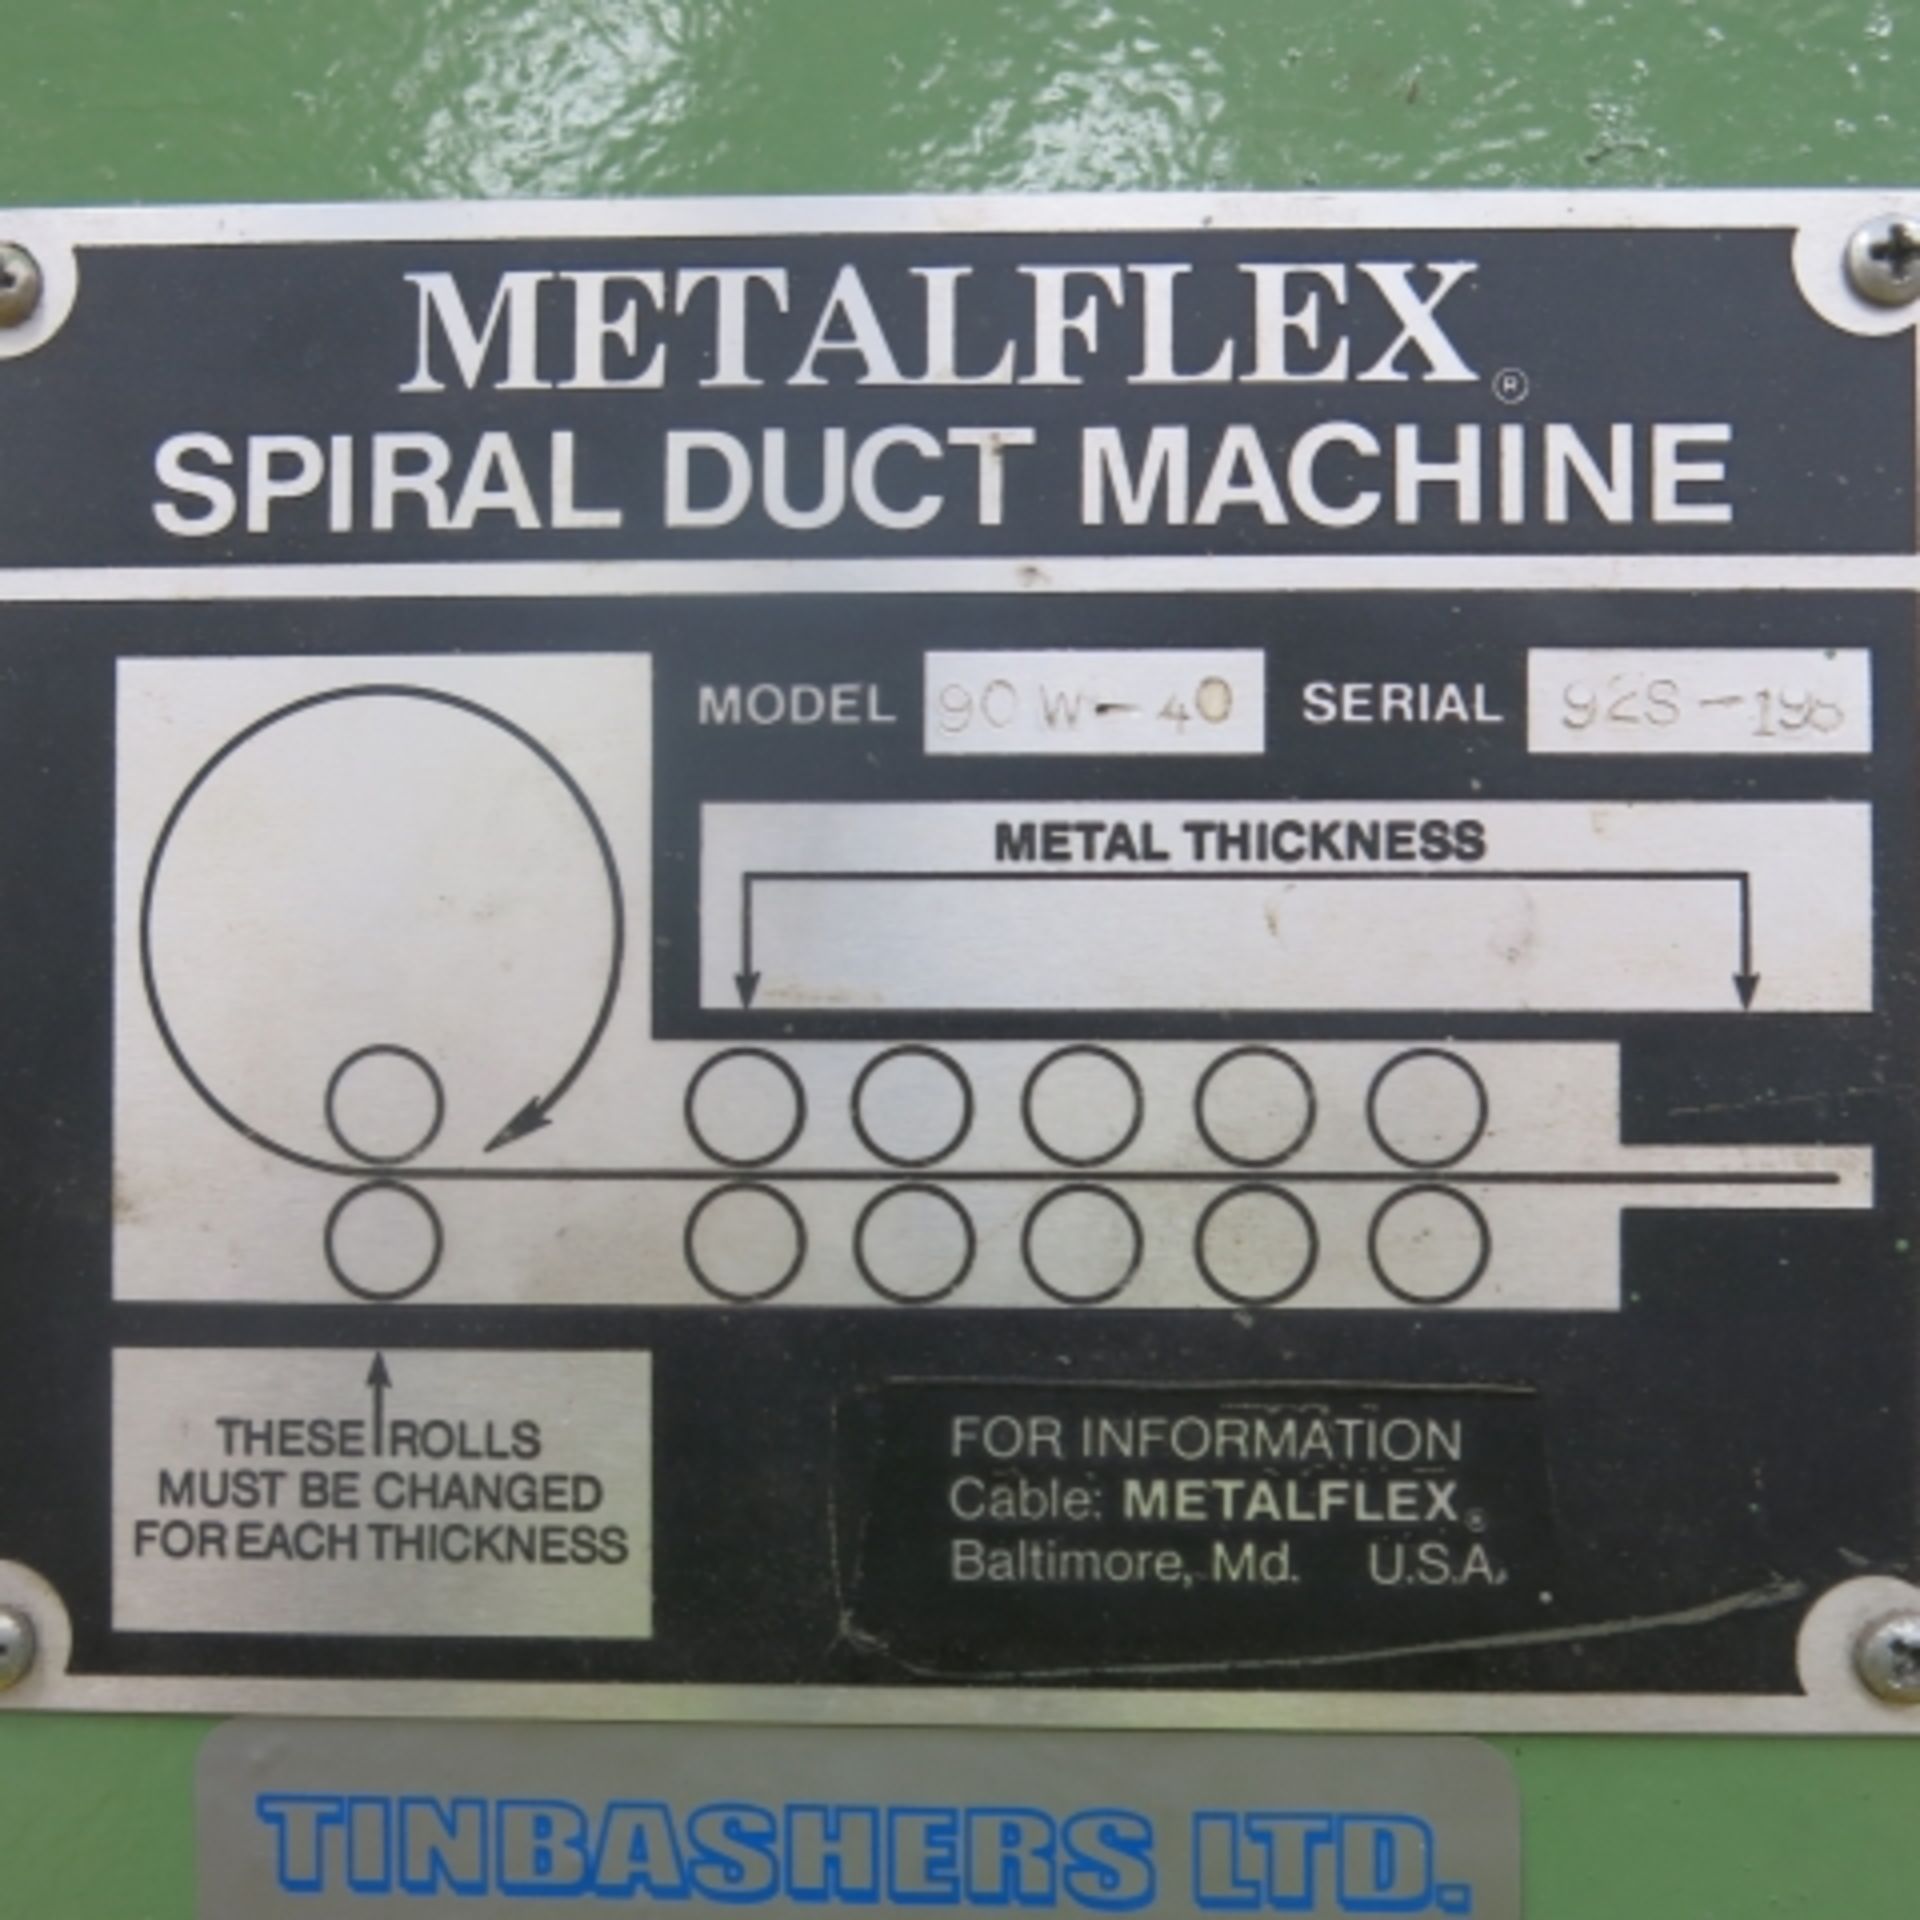 METALFLEX MODEL 90W-40 SPIRAL DUCT MACHINE, YOM 1992, S/N 92S-196 - Image 7 of 7